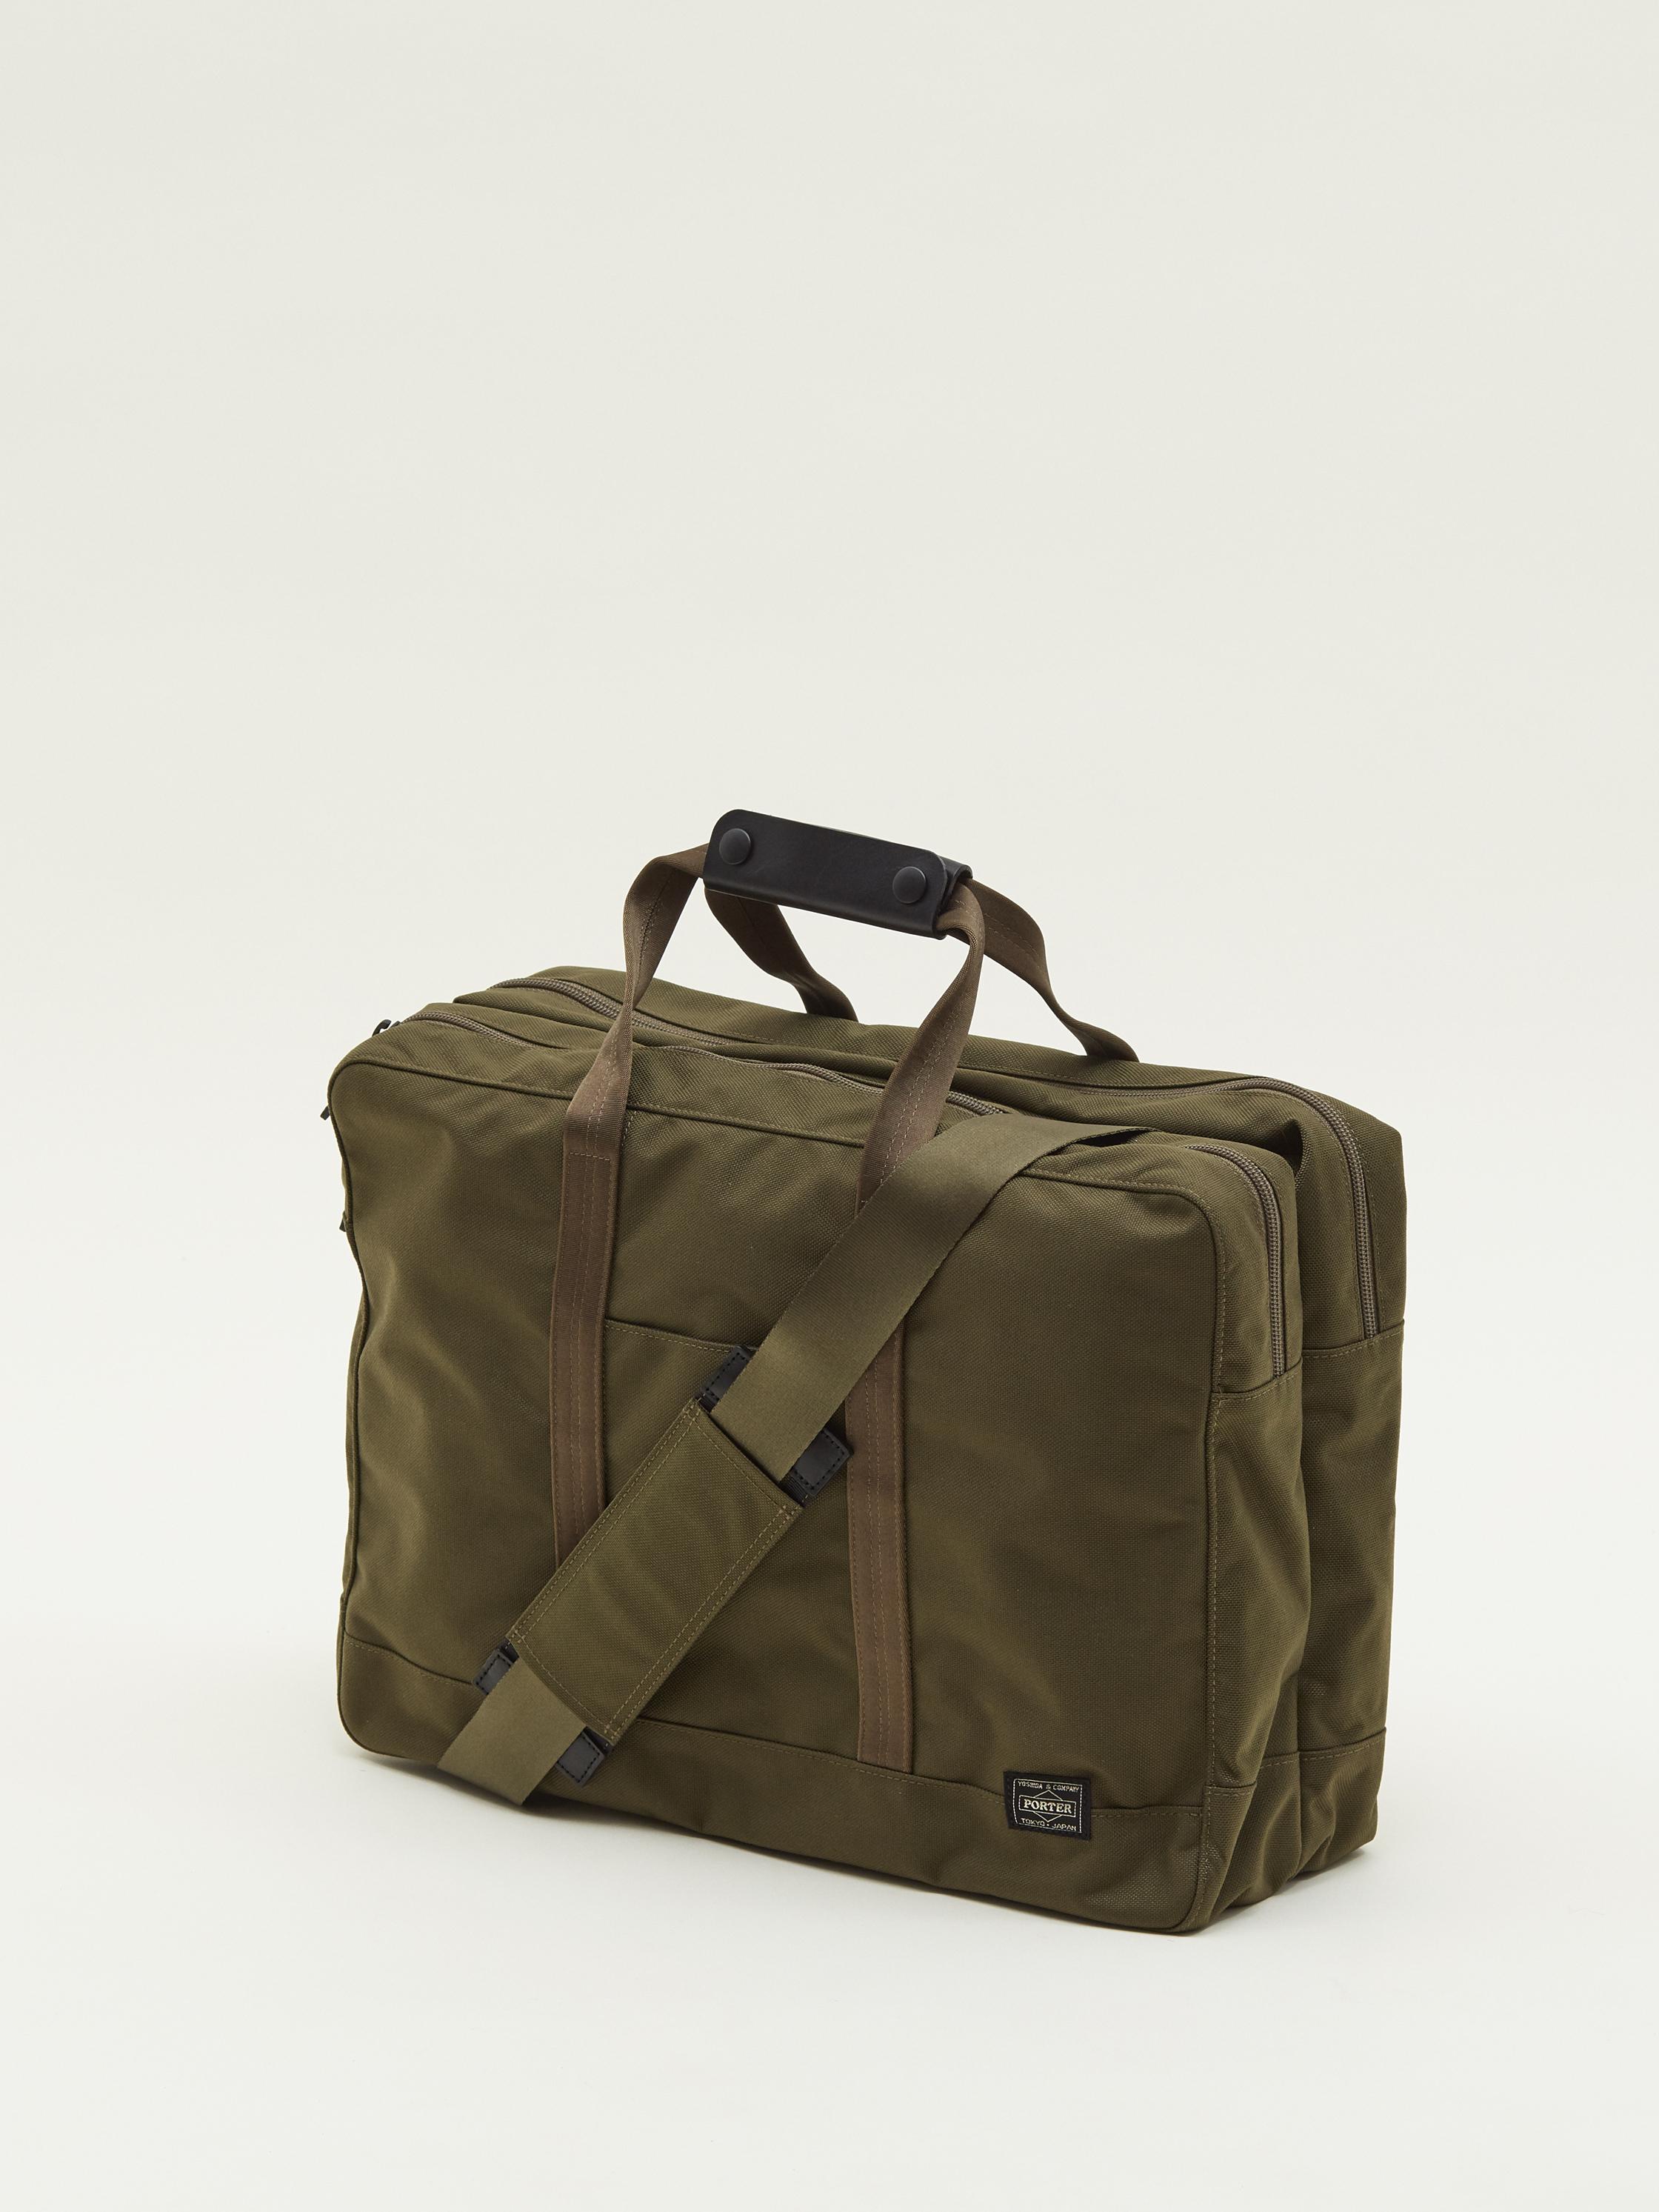 Shorthauler bag - Porter - Bags - Shop | Monocle